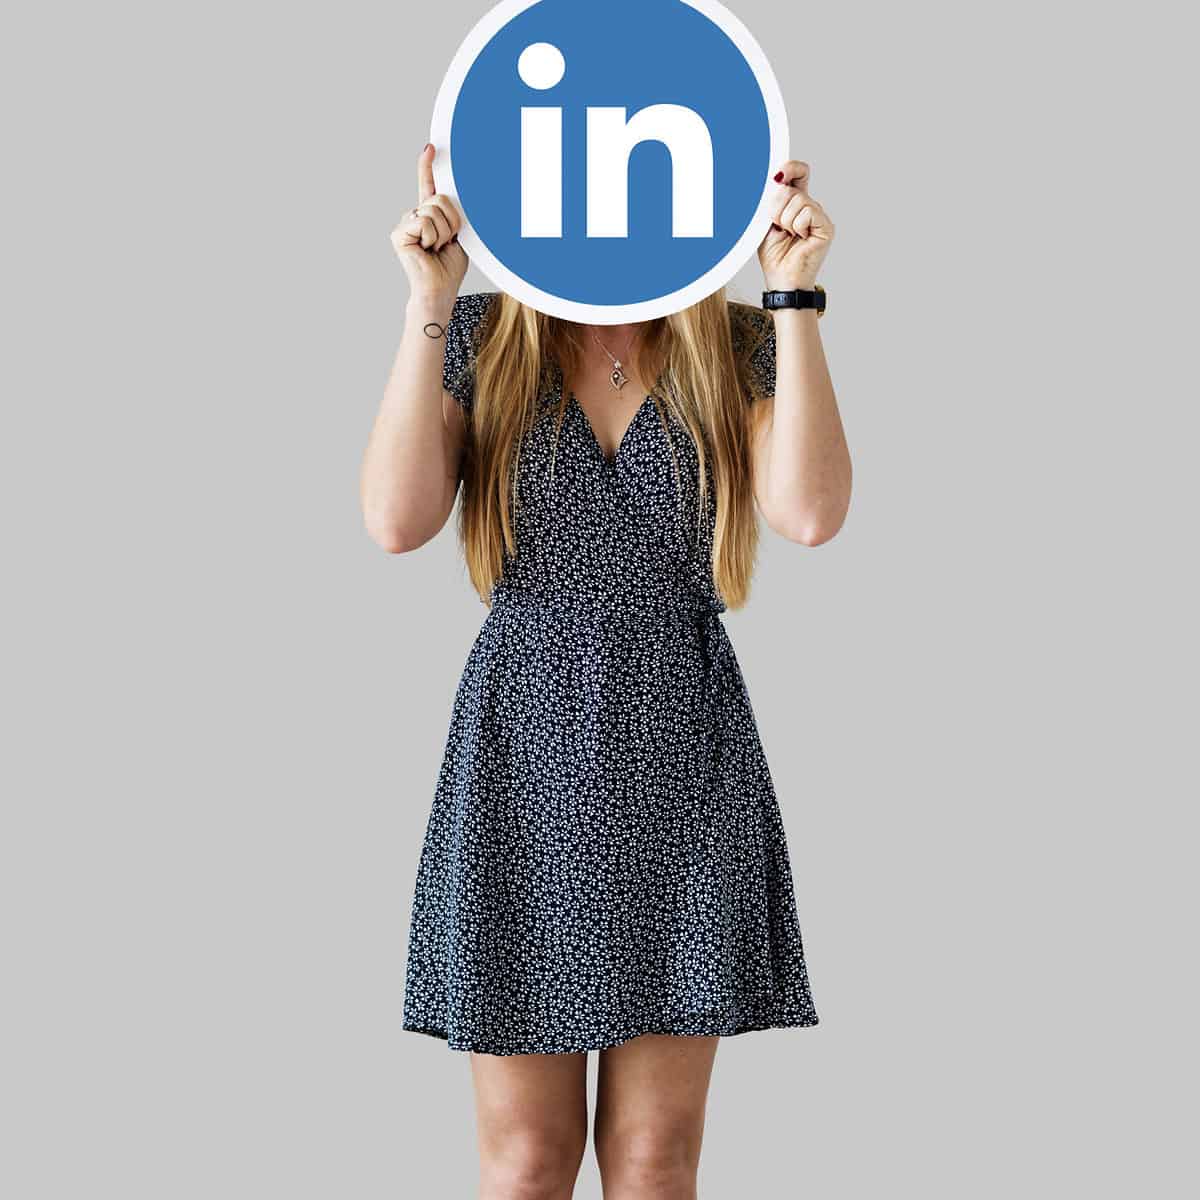 Small Business Marketing Using LinkedIn